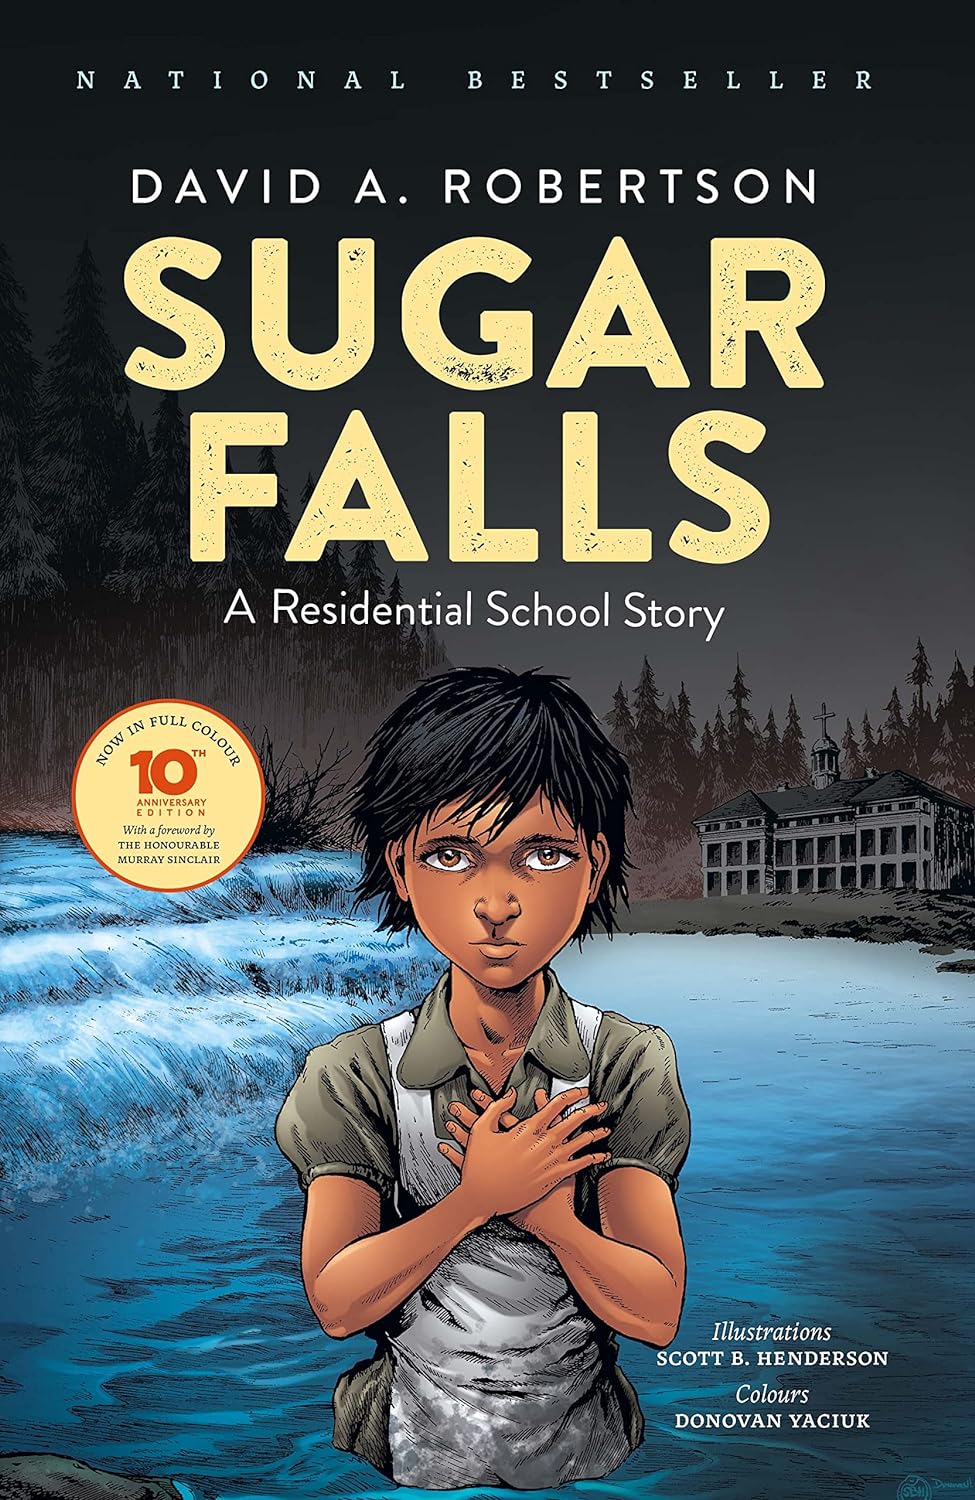 Image for "Sugar Falls"